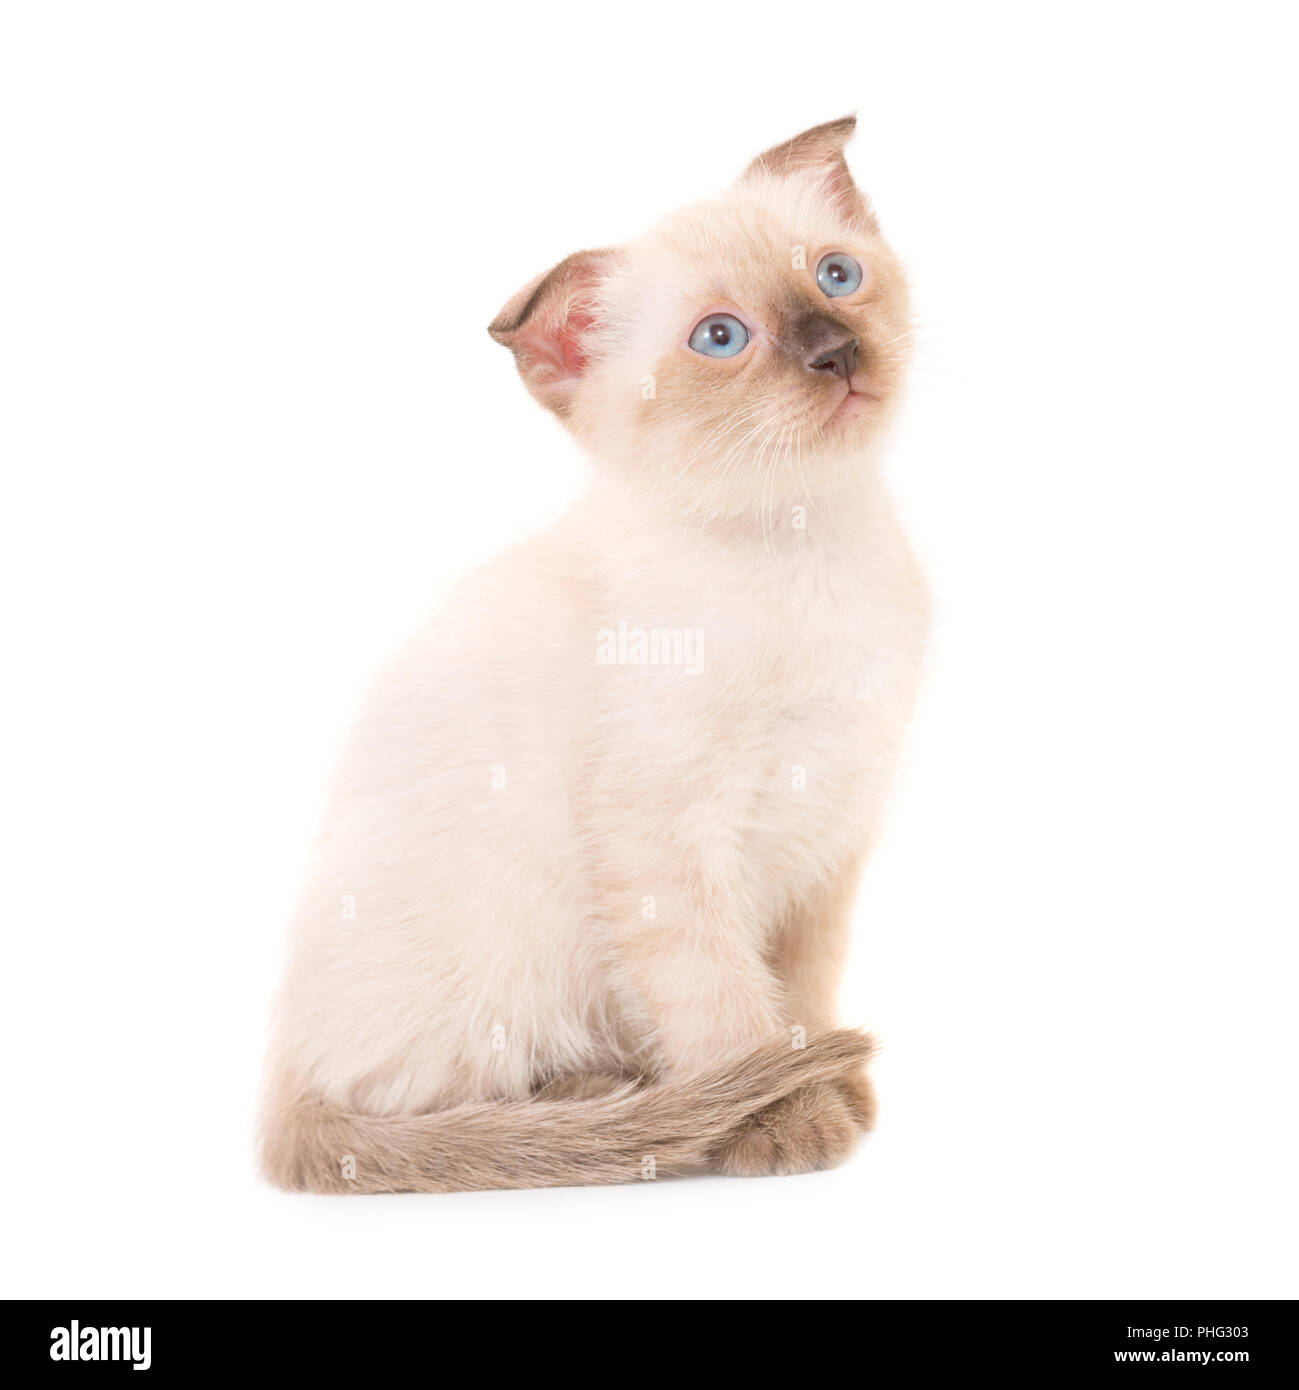 Sitting purebred kitten Stock Photo